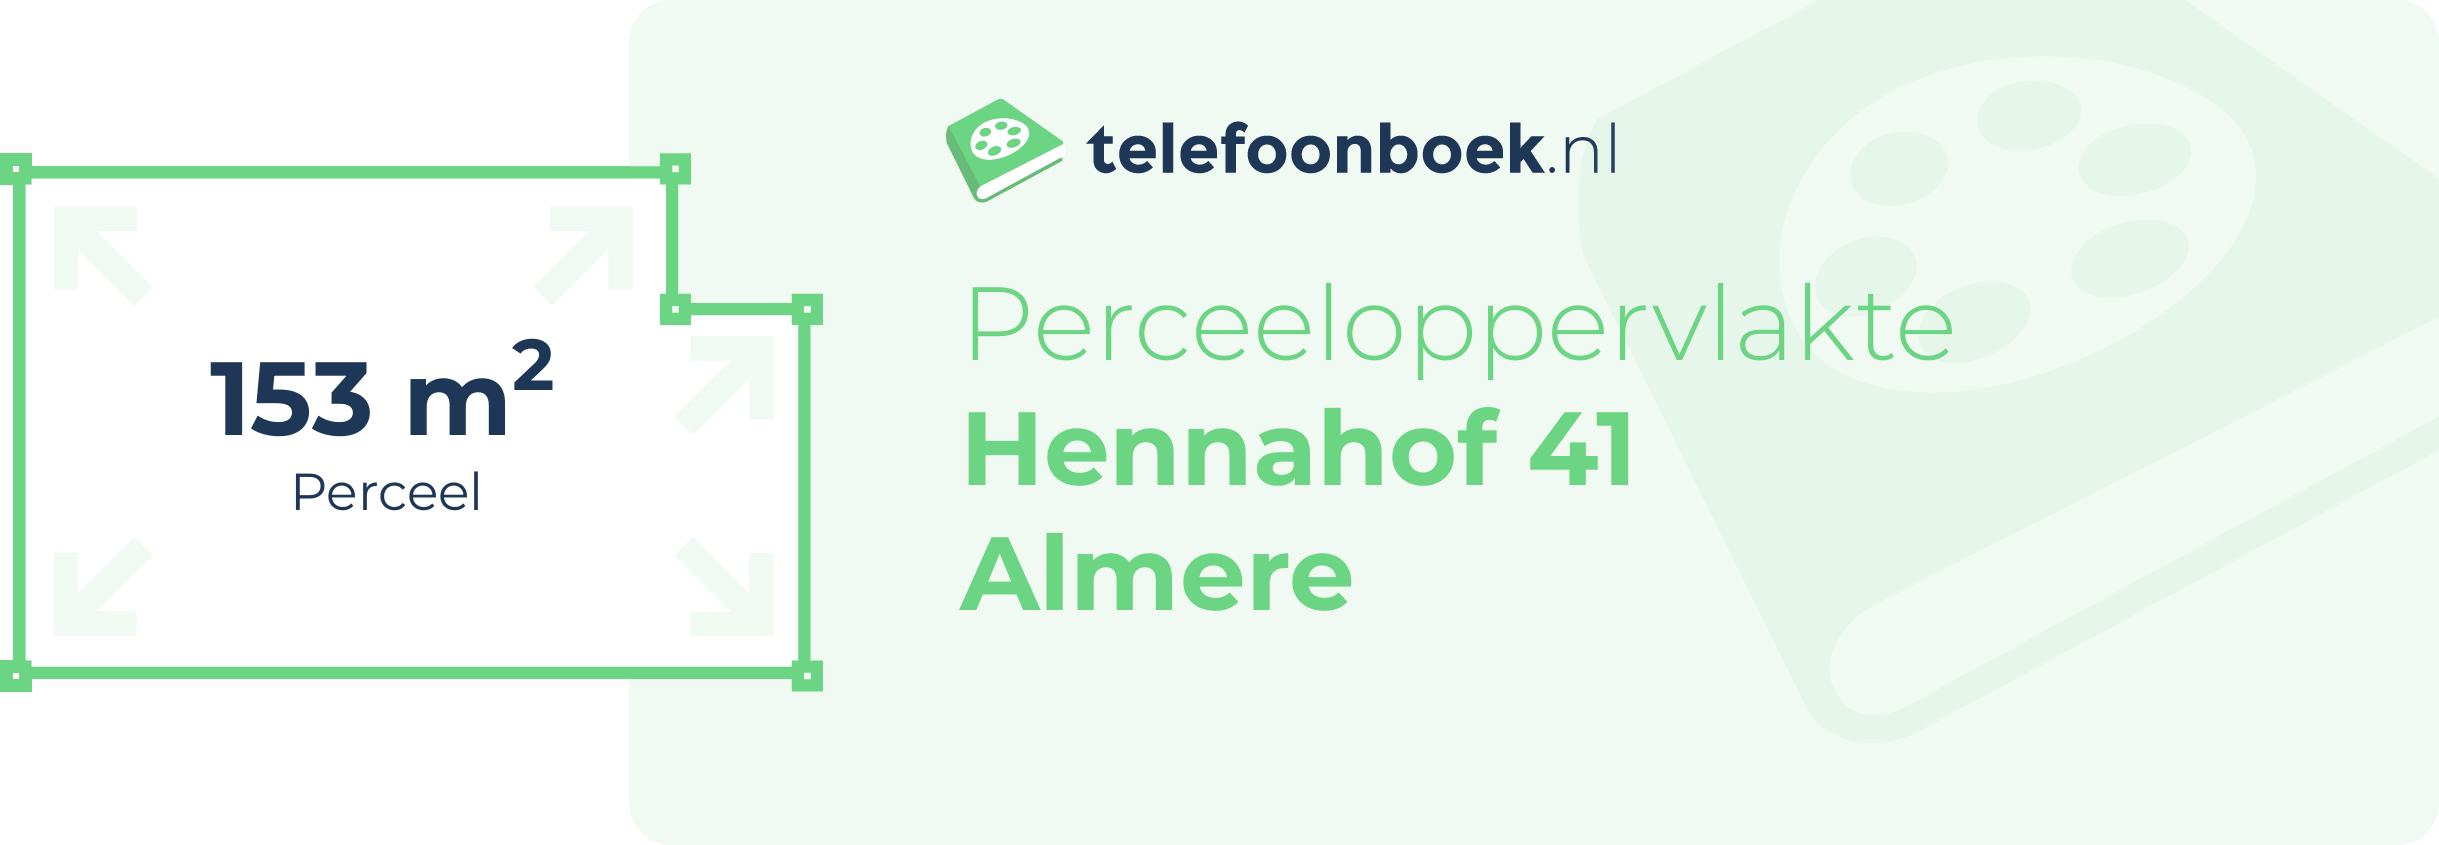 Perceeloppervlakte Hennahof 41 Almere